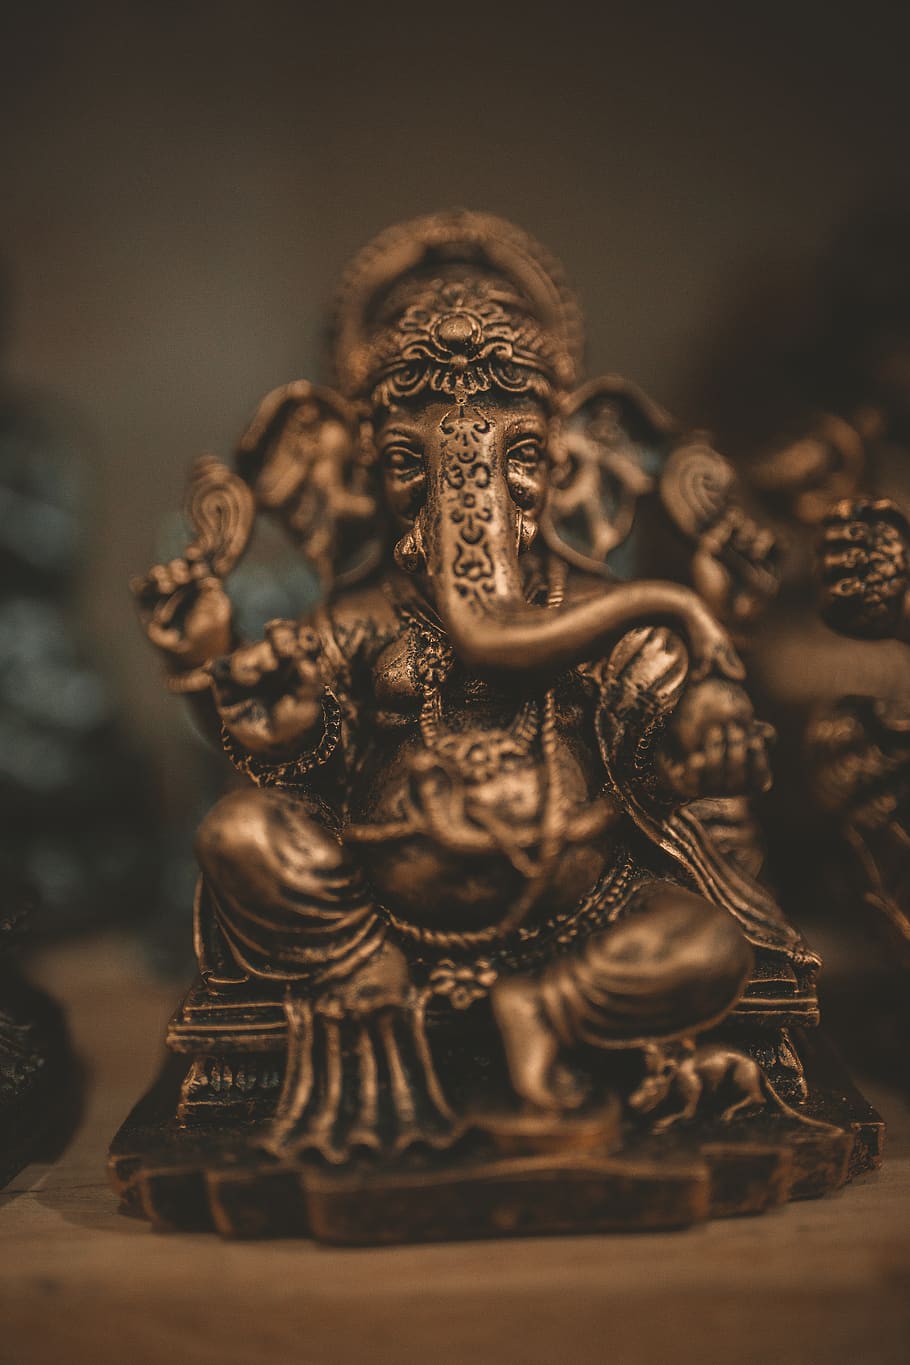 HD wallpaper: Brass-colored Lord Ganesha Figurine, ancient, art ...